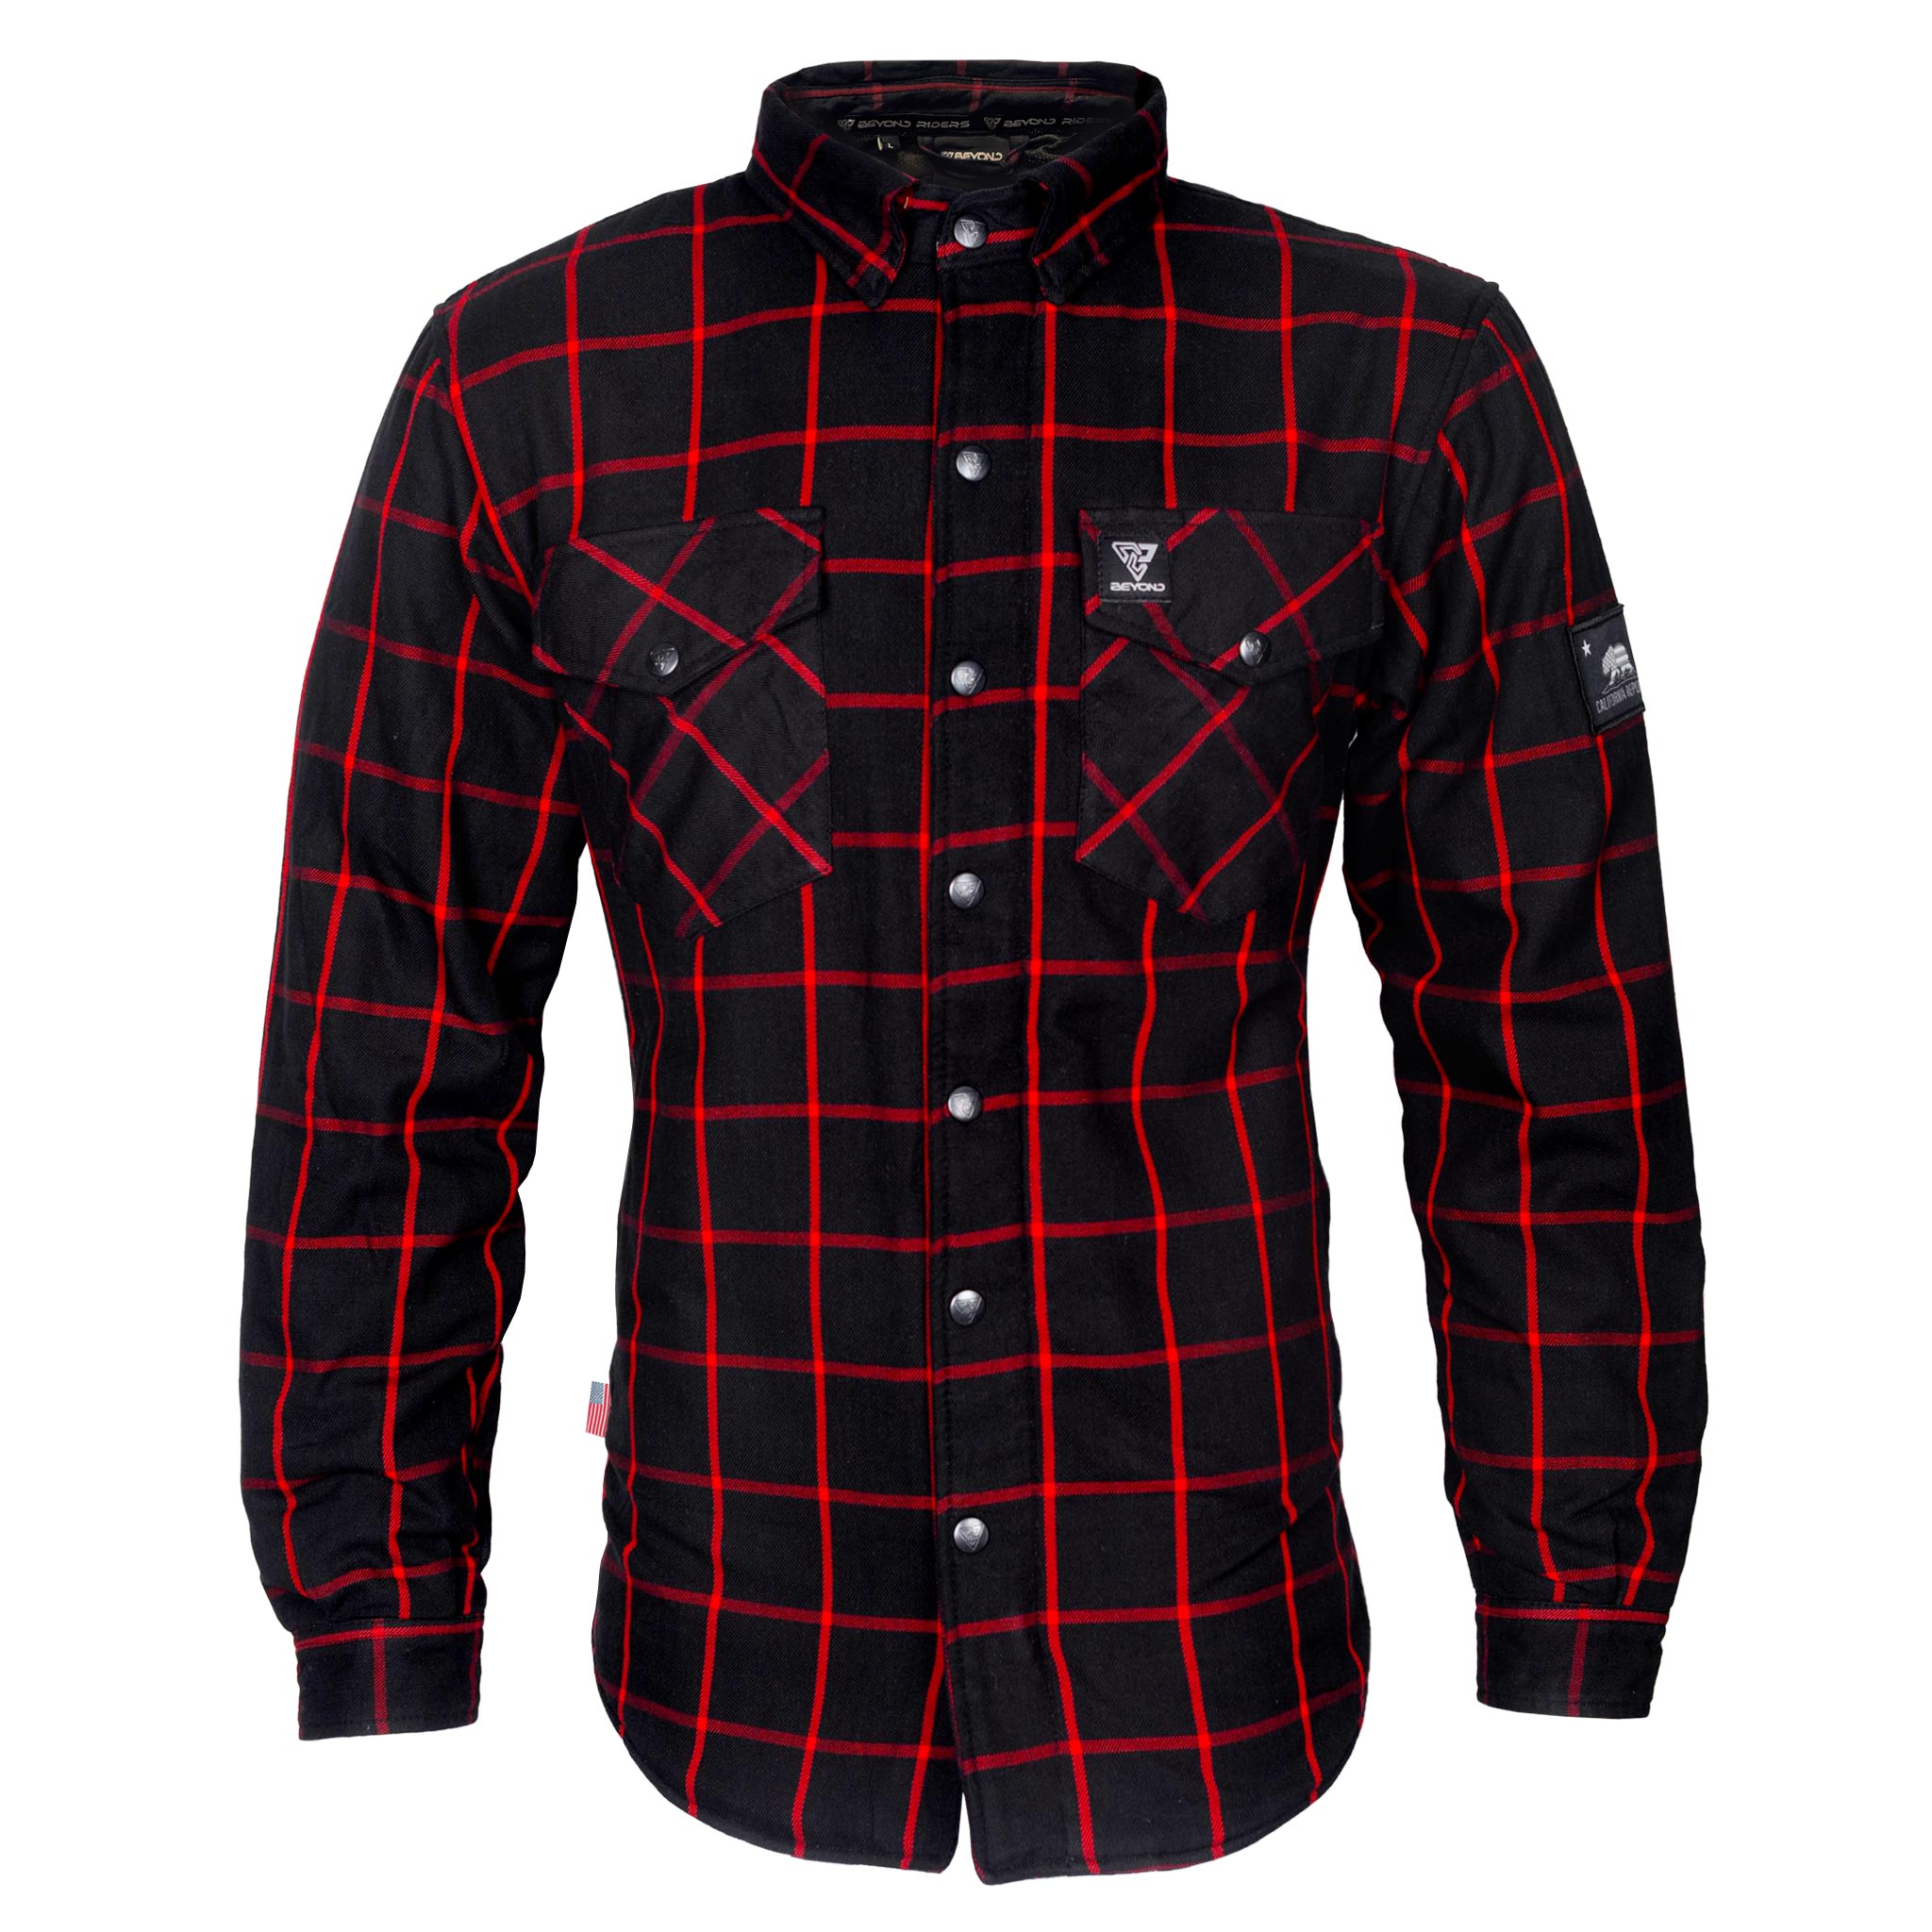 Protective Flannel Shirt "Crimson Lane" - Black & Red Stripes